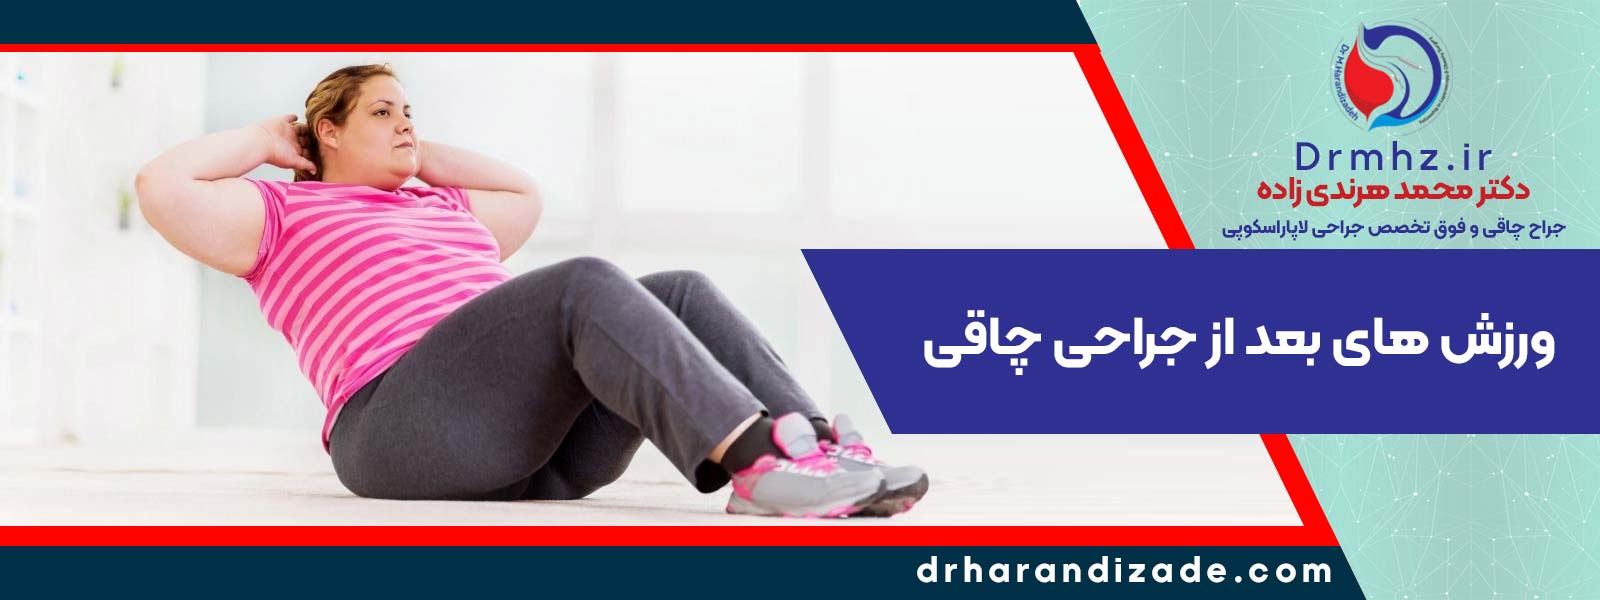 Exercises after bariatric surgery - بهترین دکتر لاغری در اصفهان